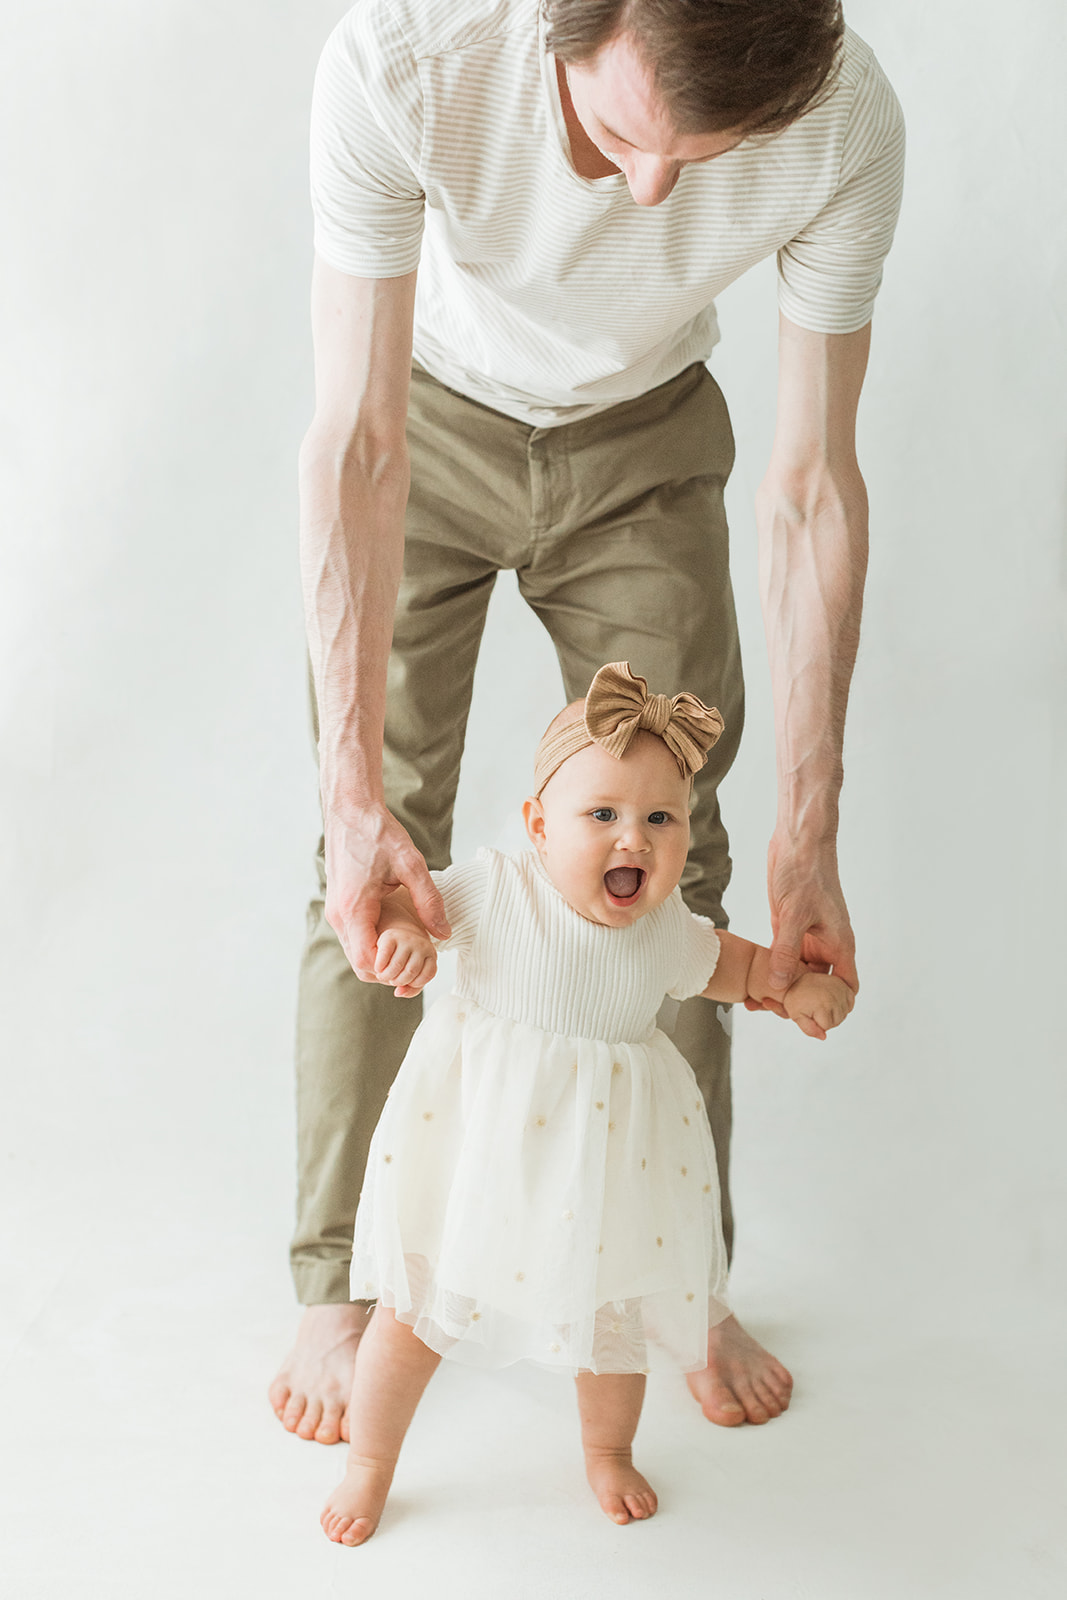 Nashville baby photographer. Studio photography. Dad and baby girl.